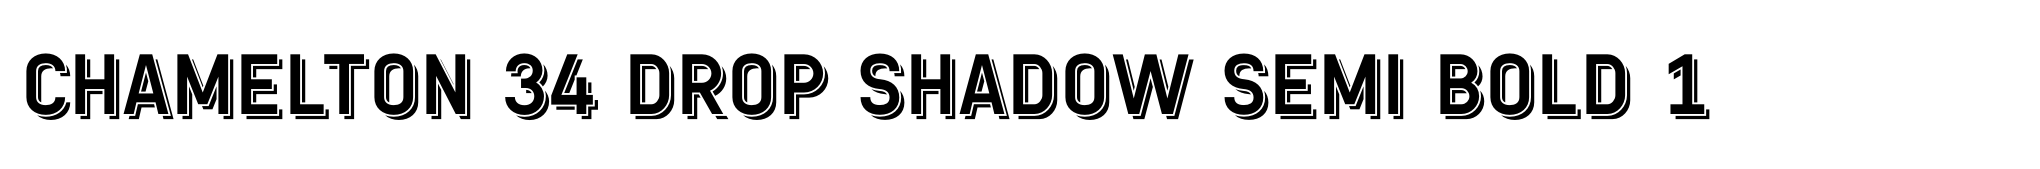 Chamelton 34 Drop Shadow Semi Bold 1 image